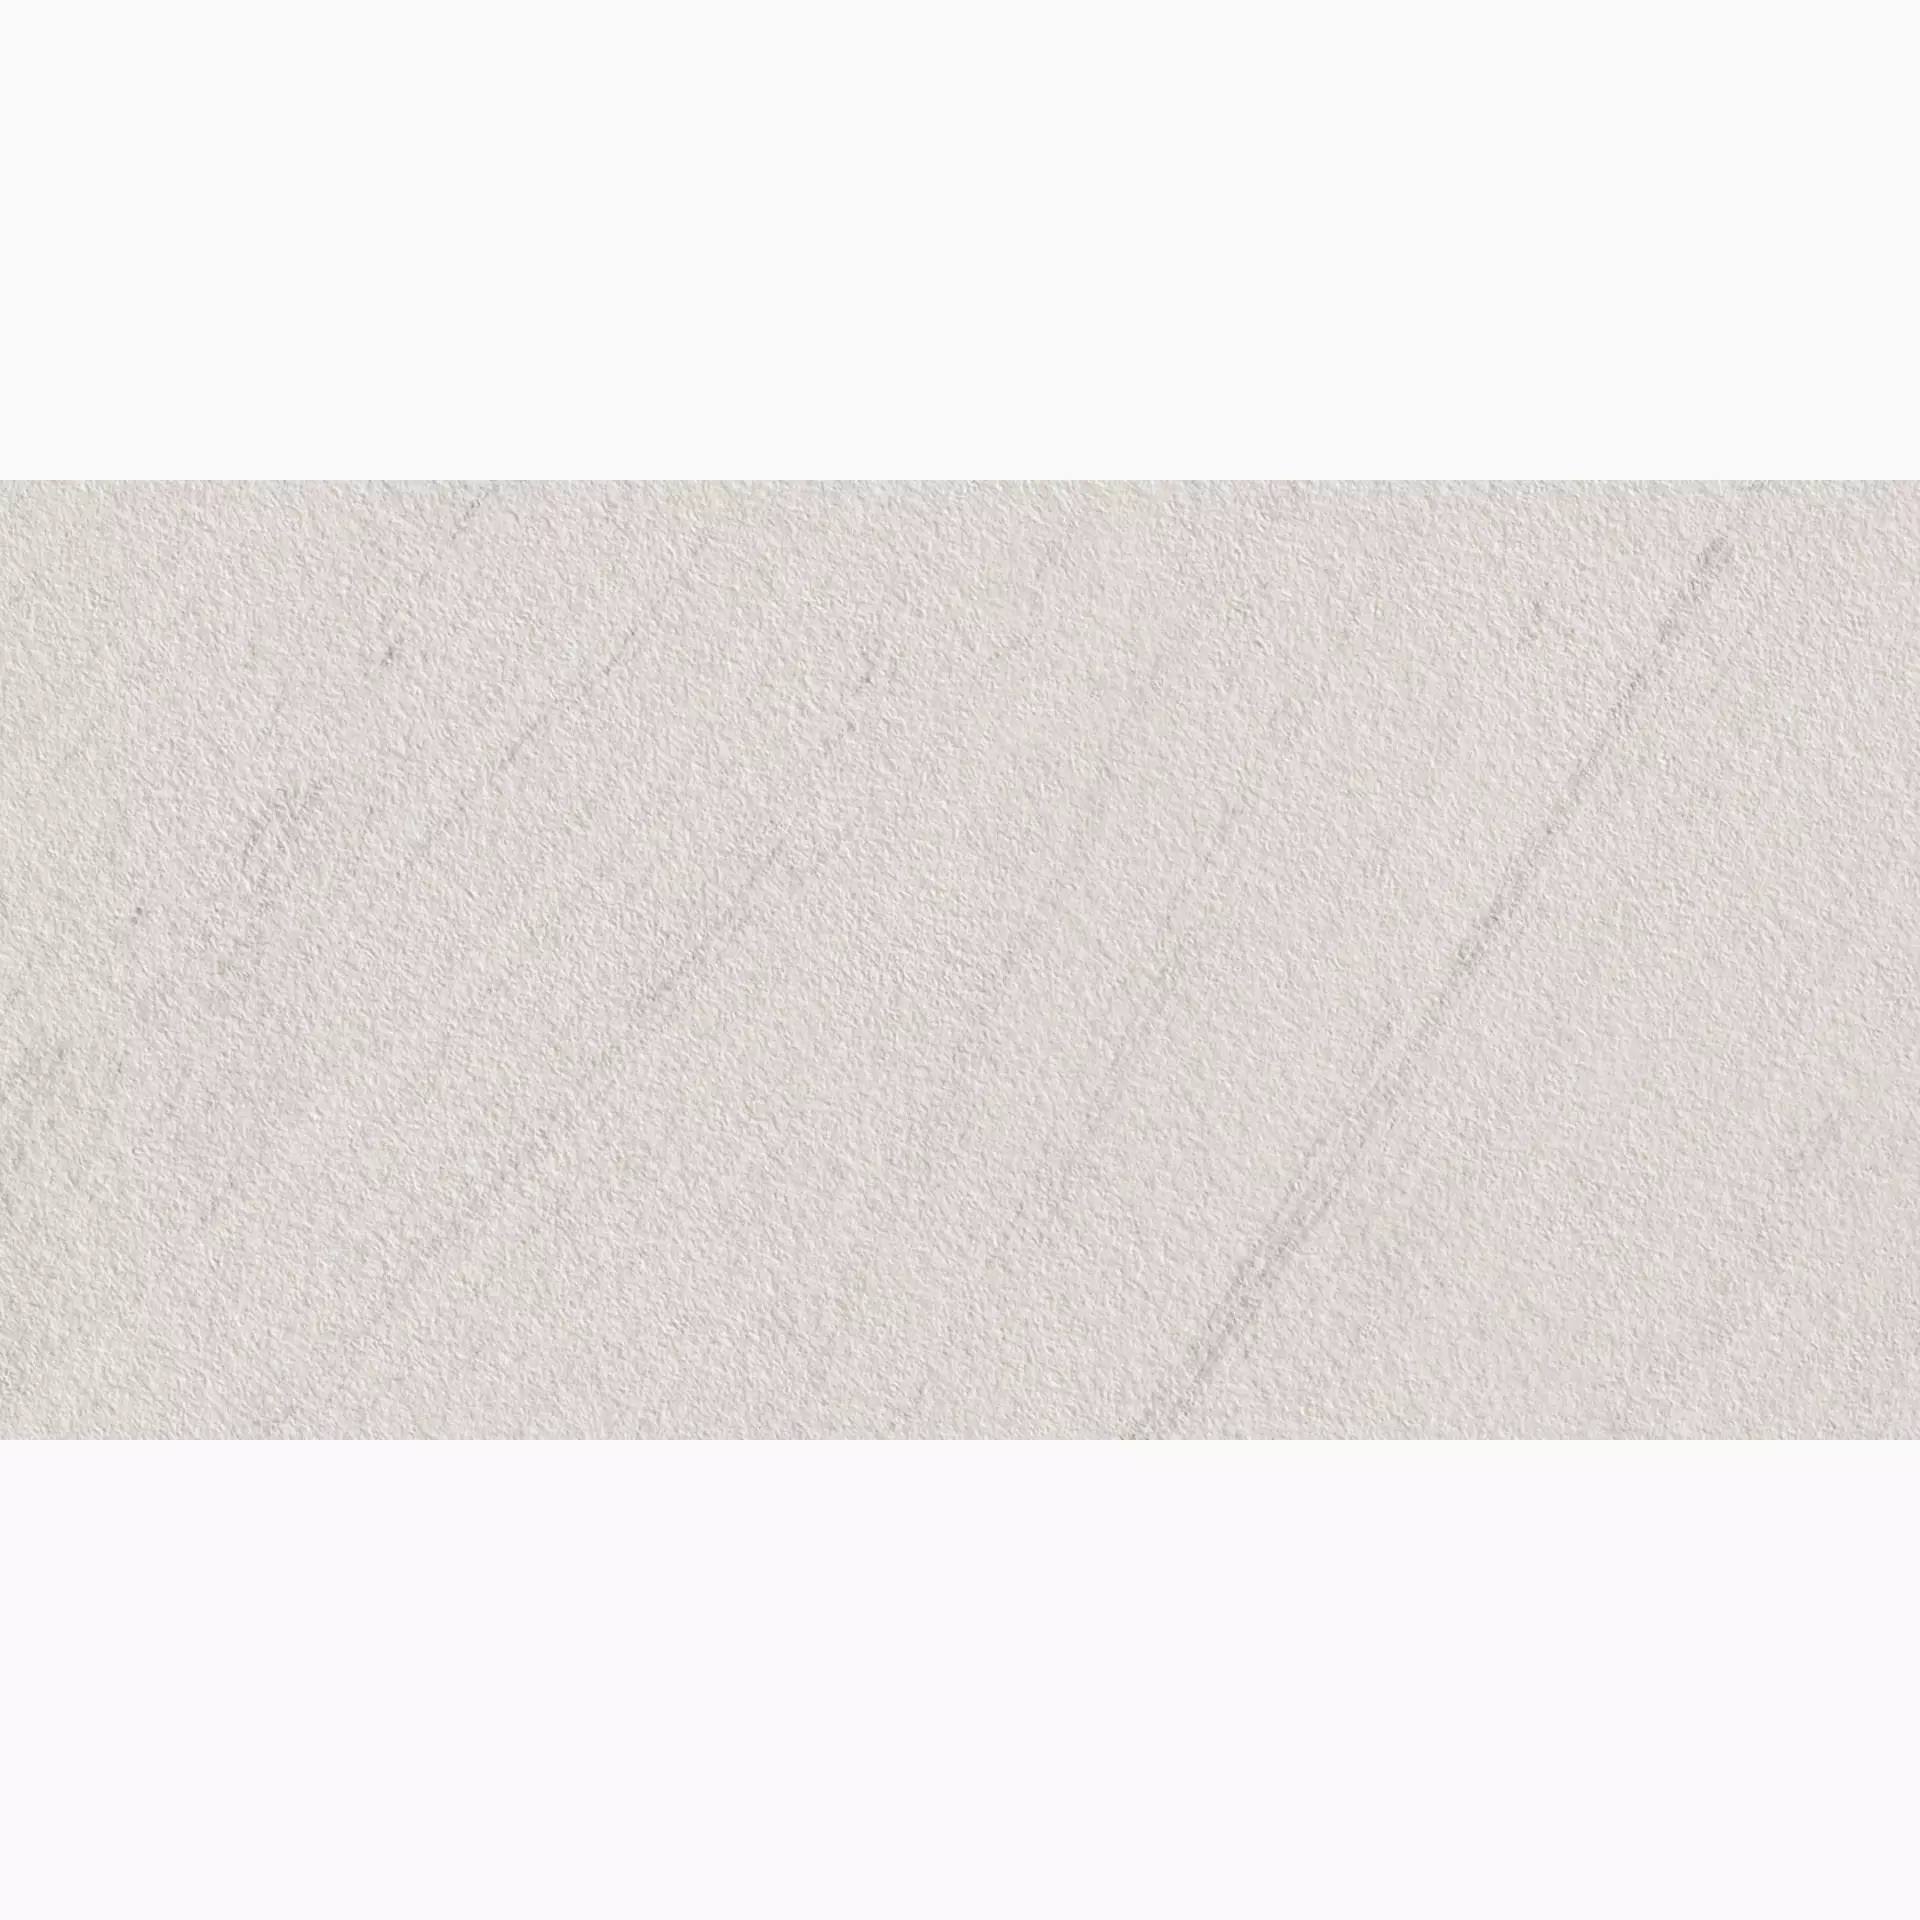 Bodenfliese,Wandfliese Marazzi Mystone Lavagna Bianco Strutturato Bianco M4VZ strukturiert 30x60cm rektifiziert 10mm